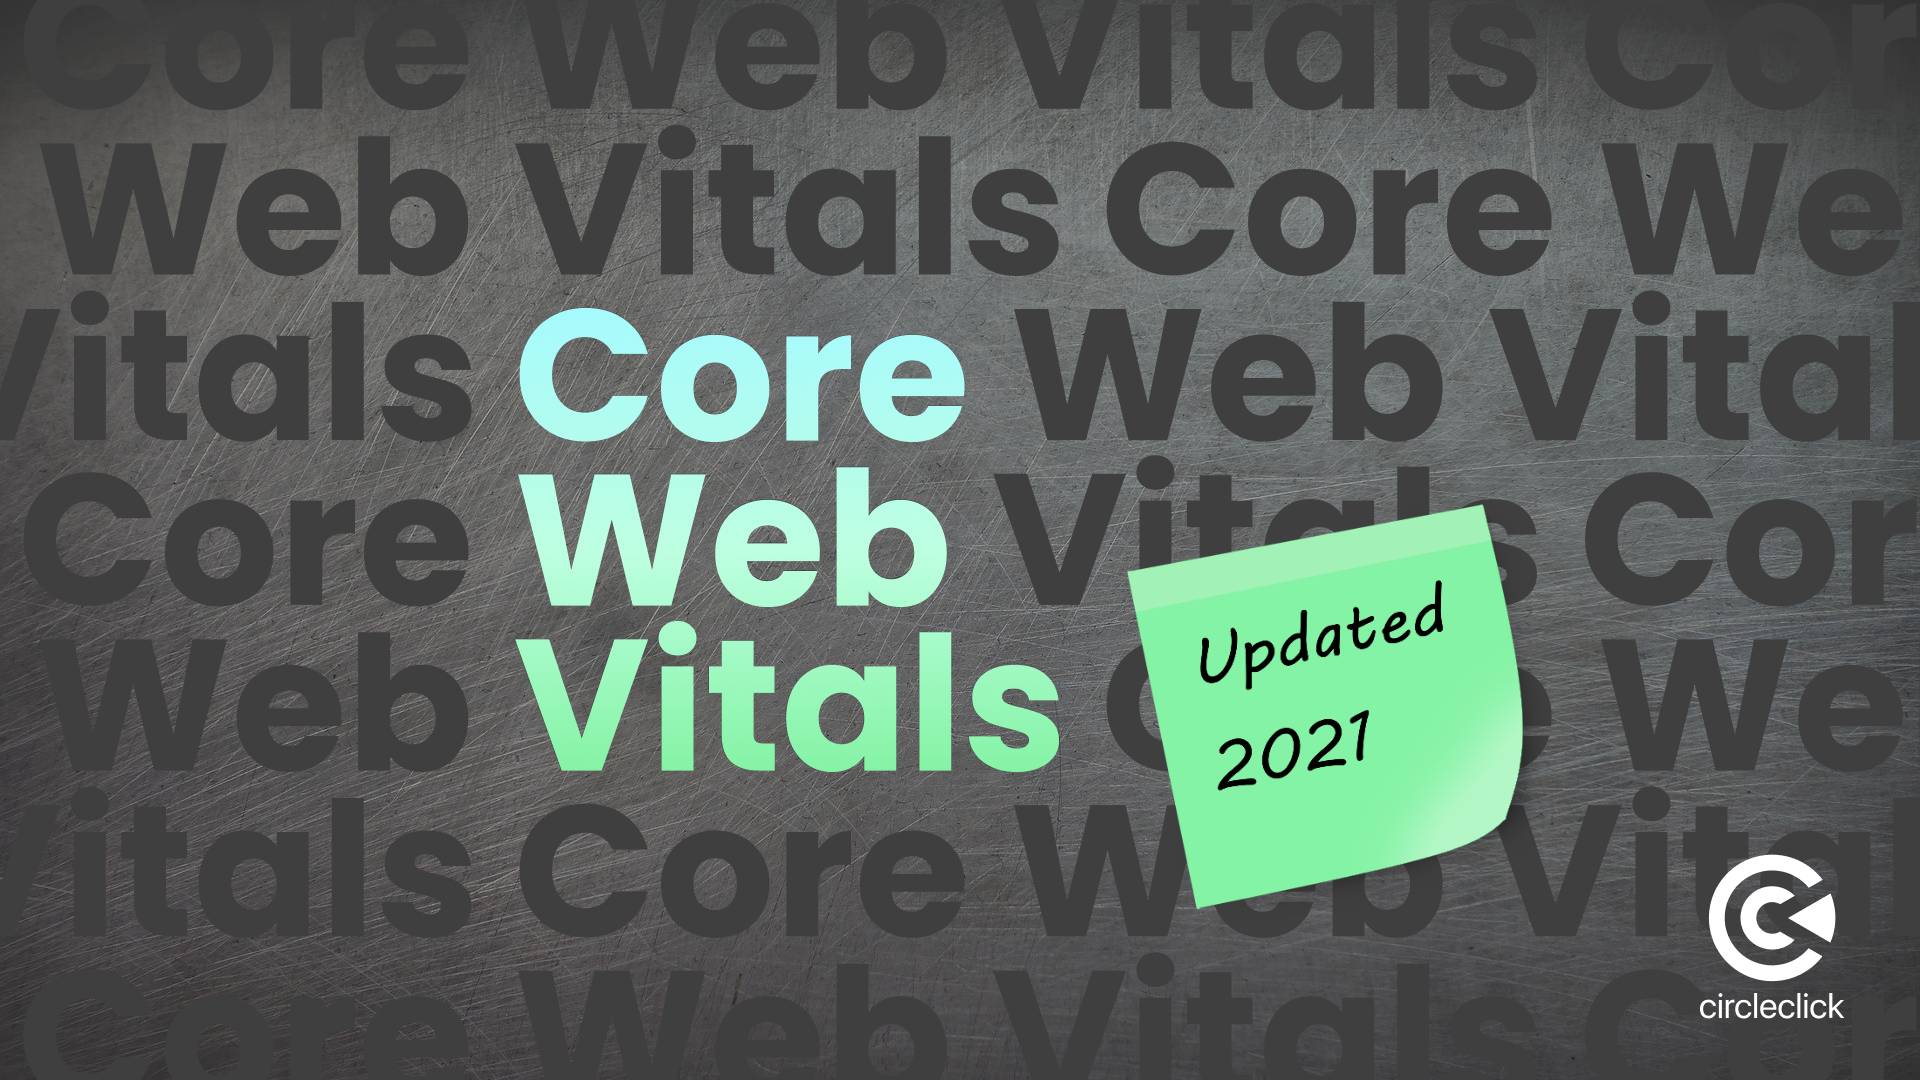 Core Web Vitals Updated